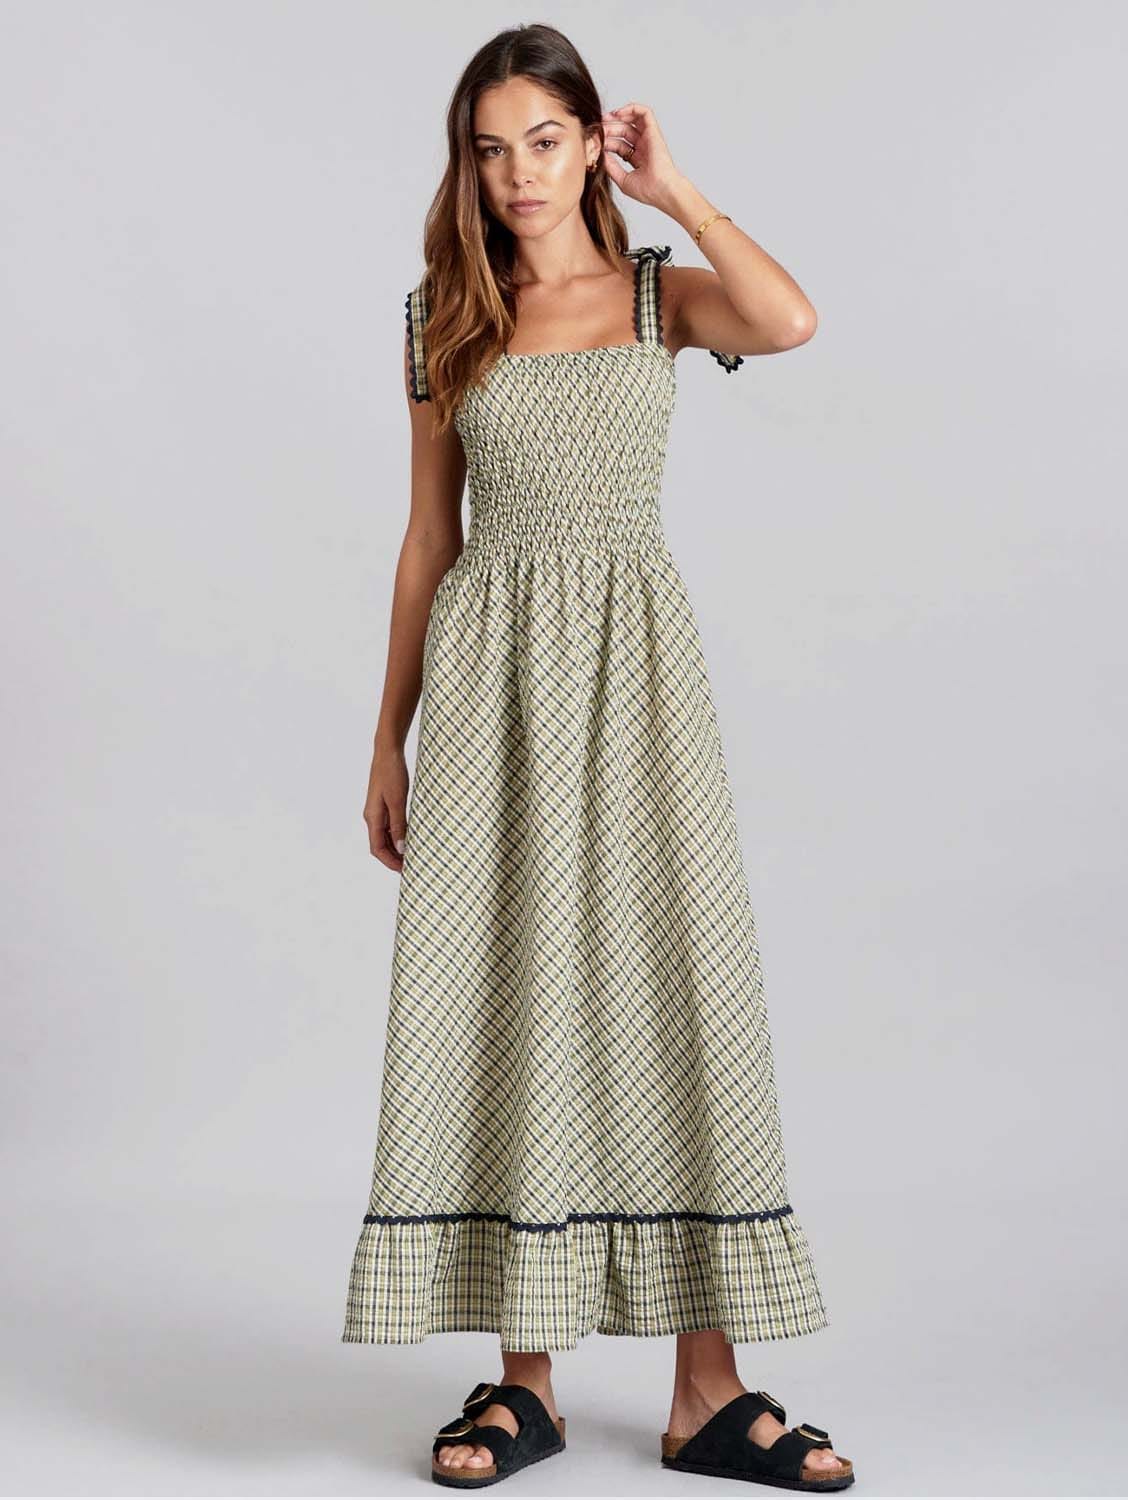 KOMODO HOYA - Organic Cotton Summer Check Dress SIZE 1 / UK 8 / EUR 36